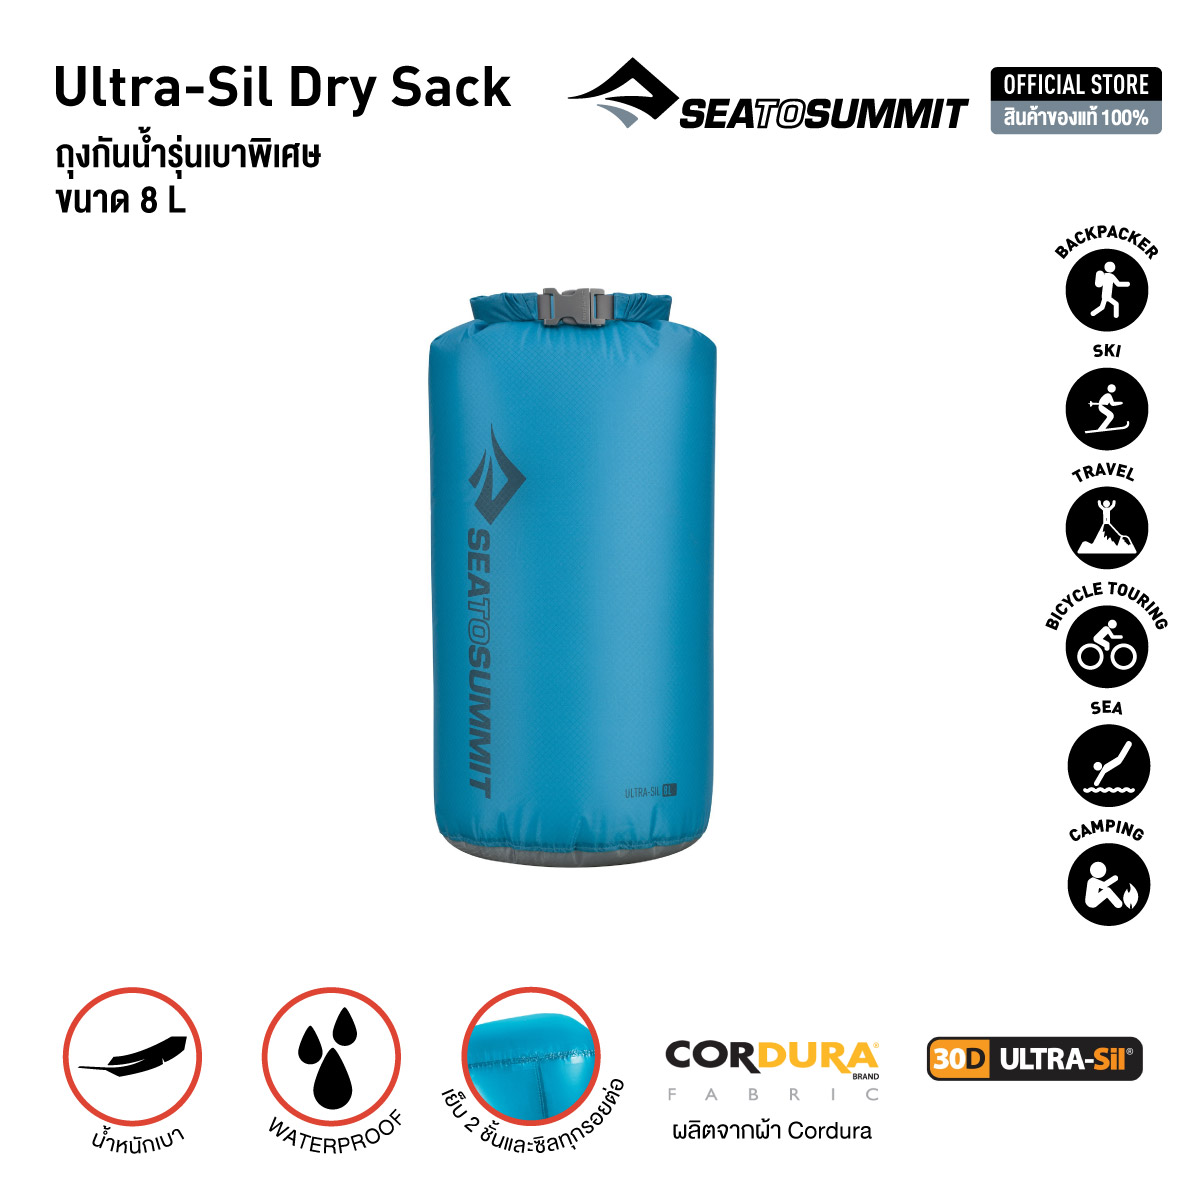 Sea to Summit  ULTRA-SIL™ DRY SACK - 8 LITRE  กระเป๋ากันน้ำ ถุงกันน้ำ Waterproof